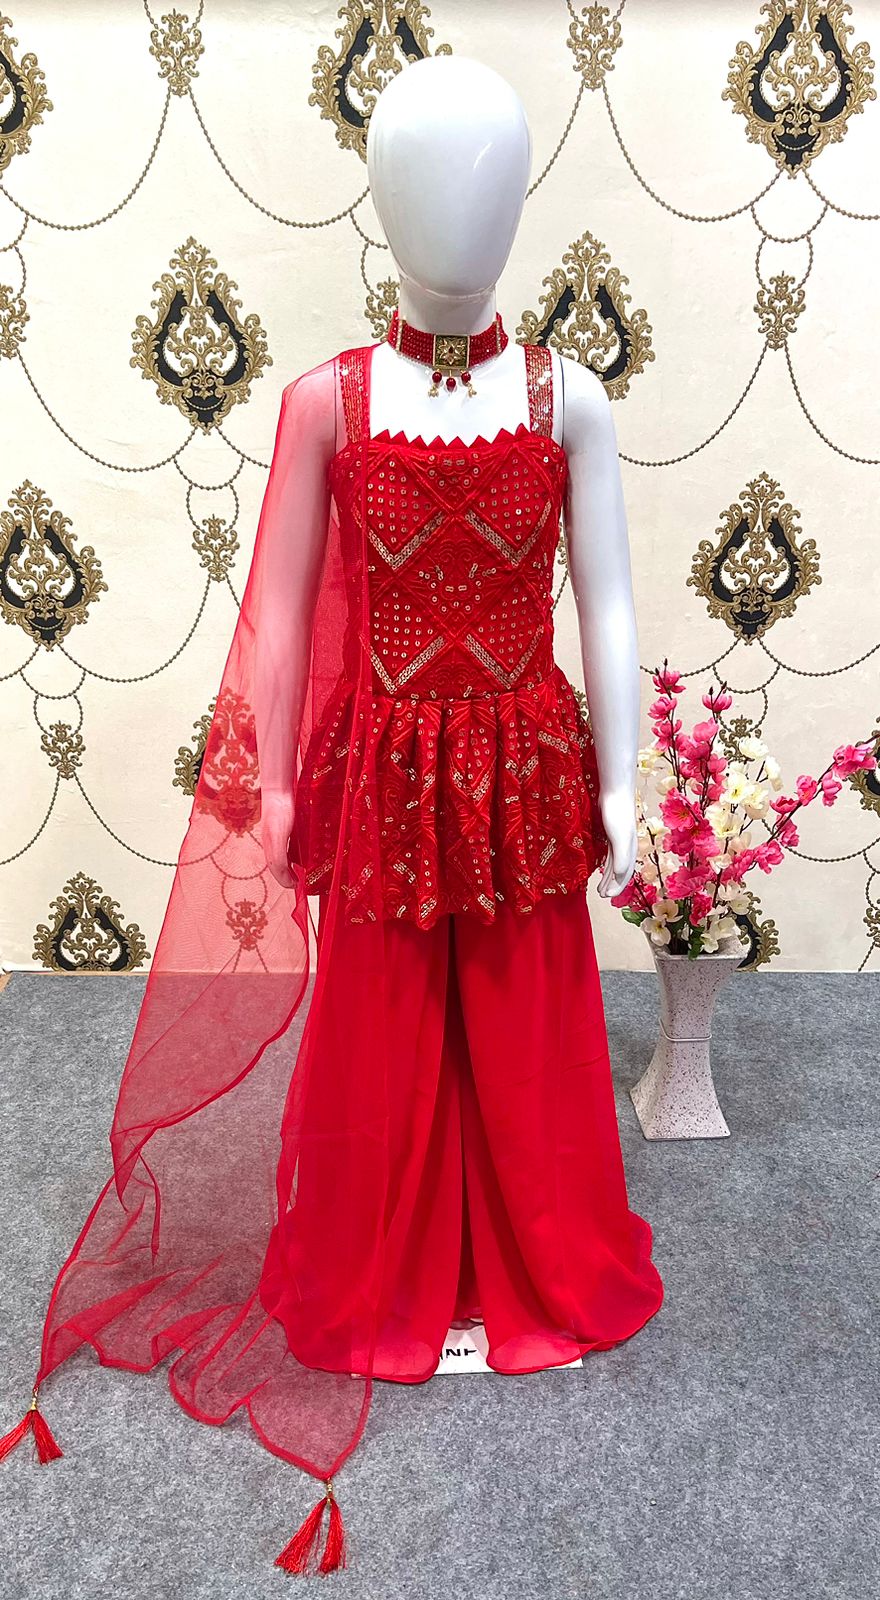 Pakistani 7 years old Baby Girl Fancy Sharara Dress for Party Wear. | eBay